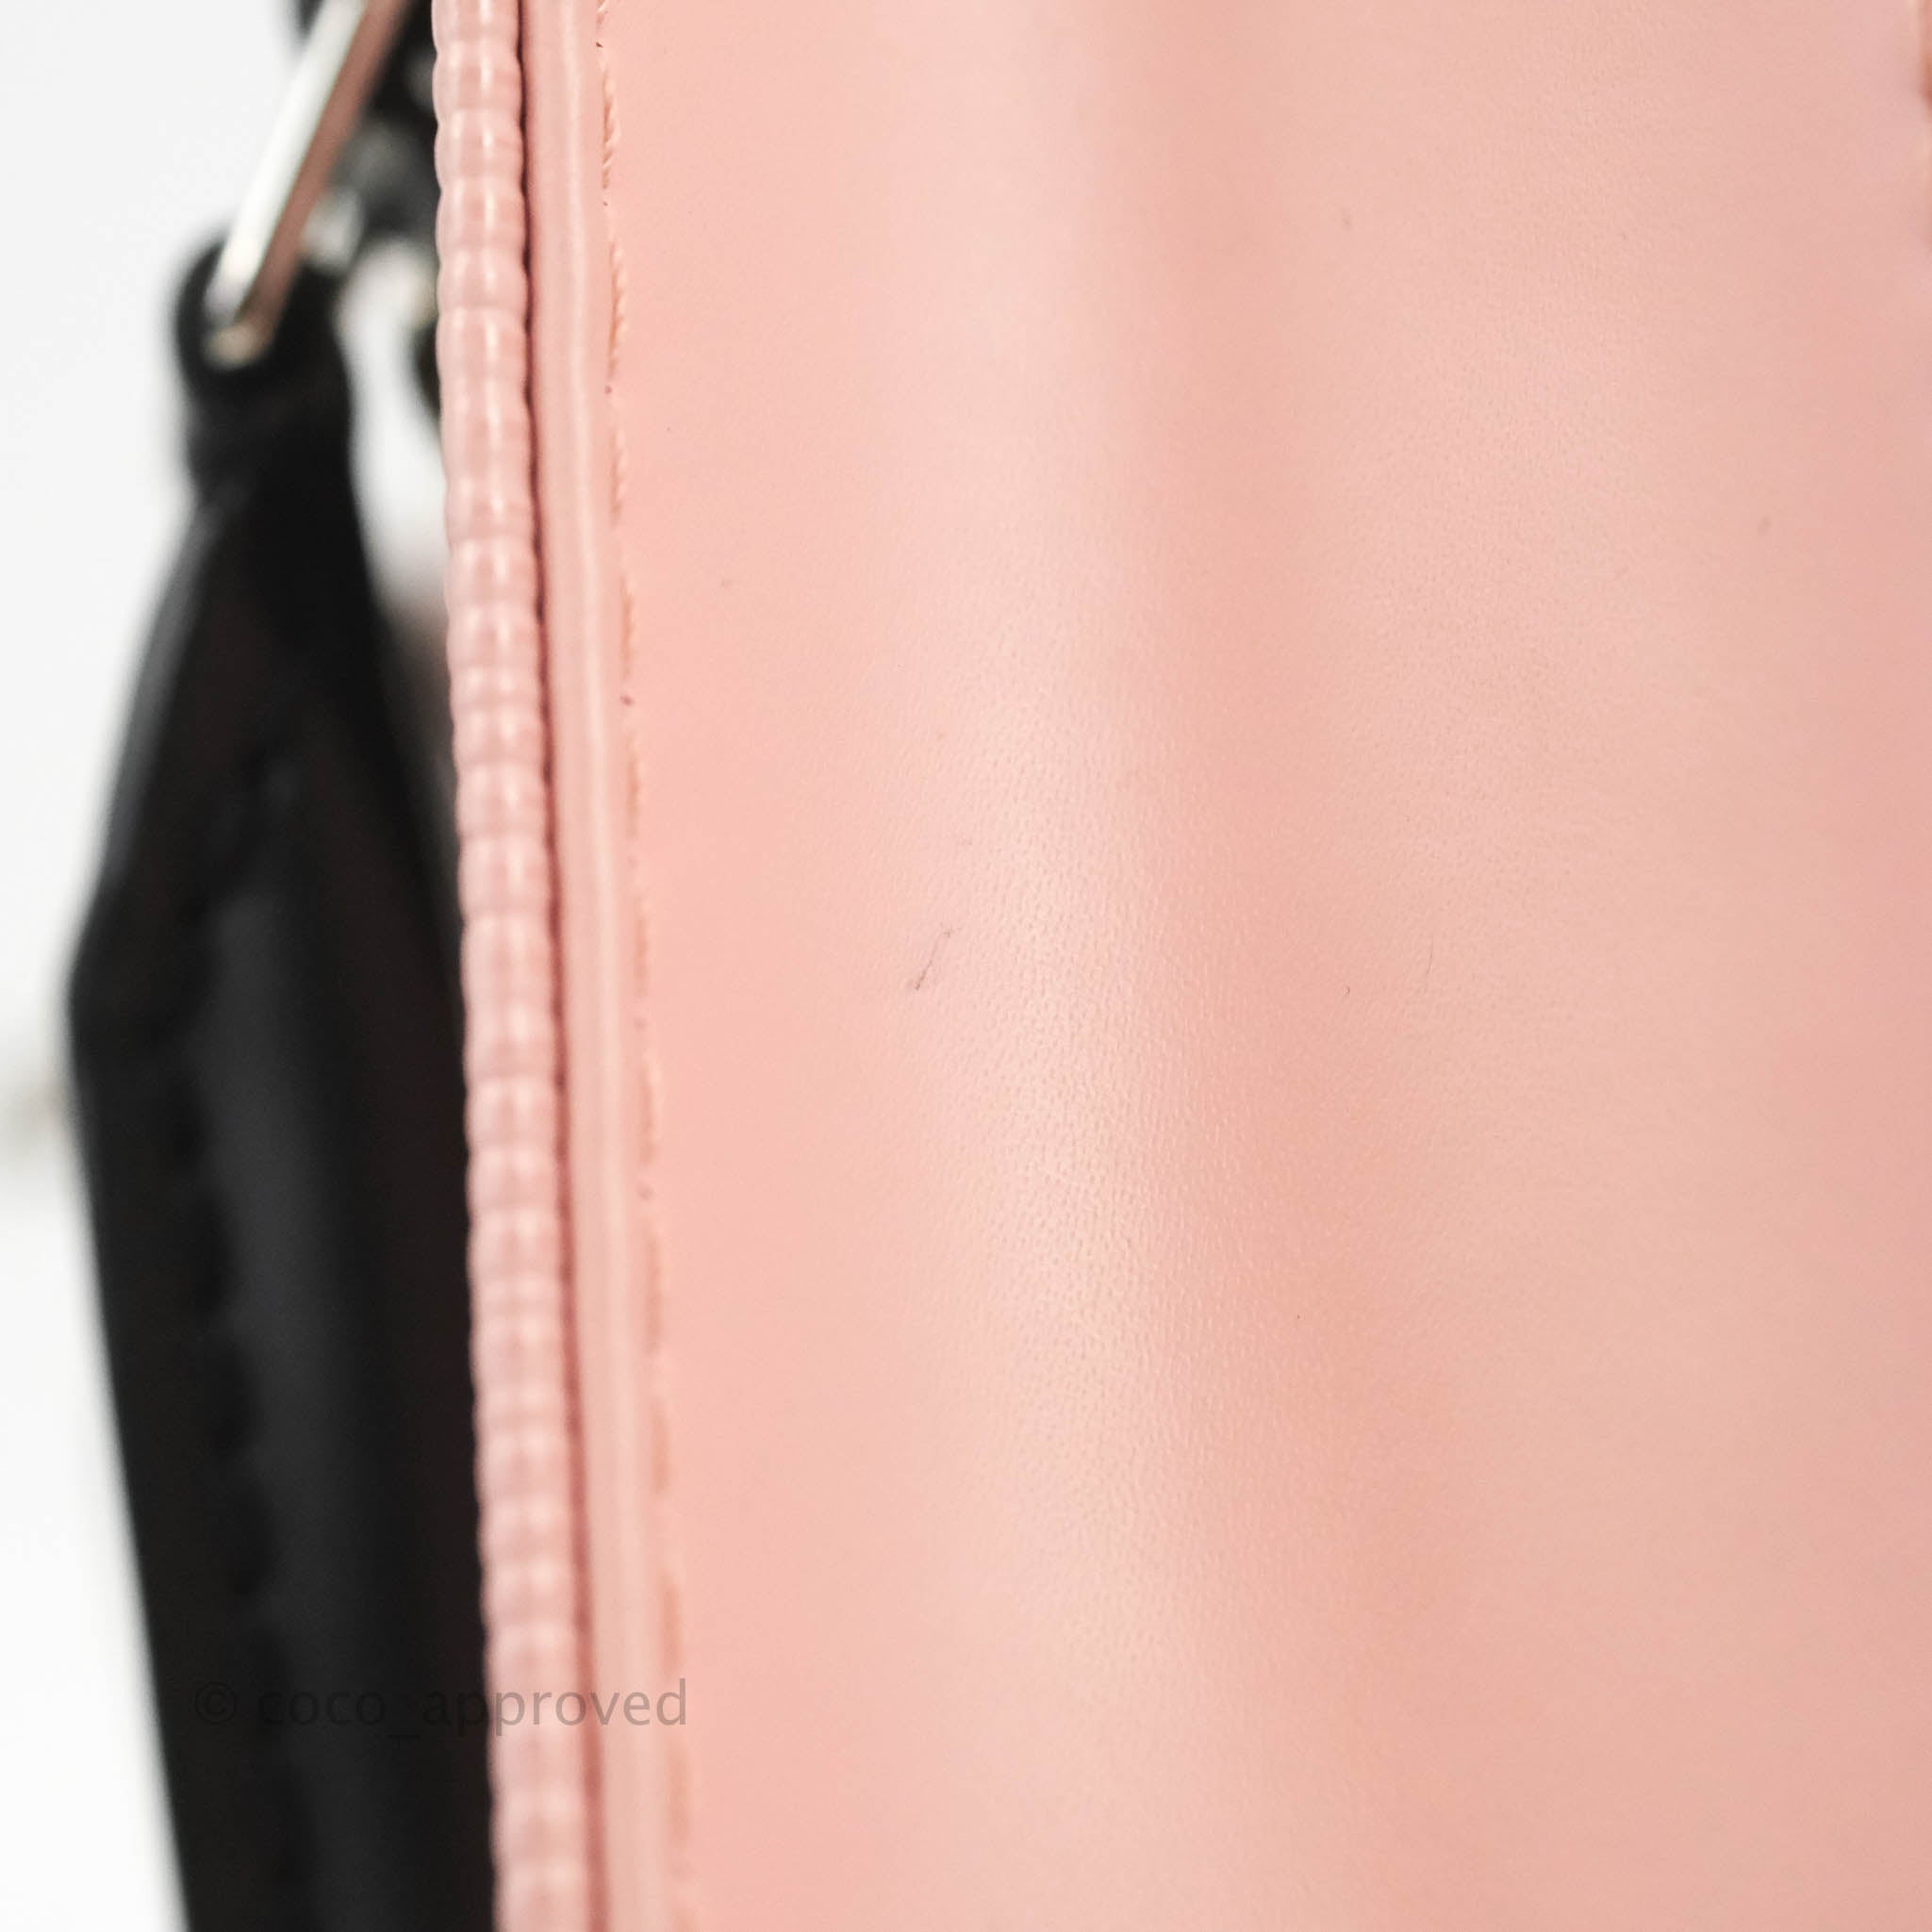 Louis Vuitton: All-New Épi Colours For The Petit Sac Plat - BAGAHOLICBOY